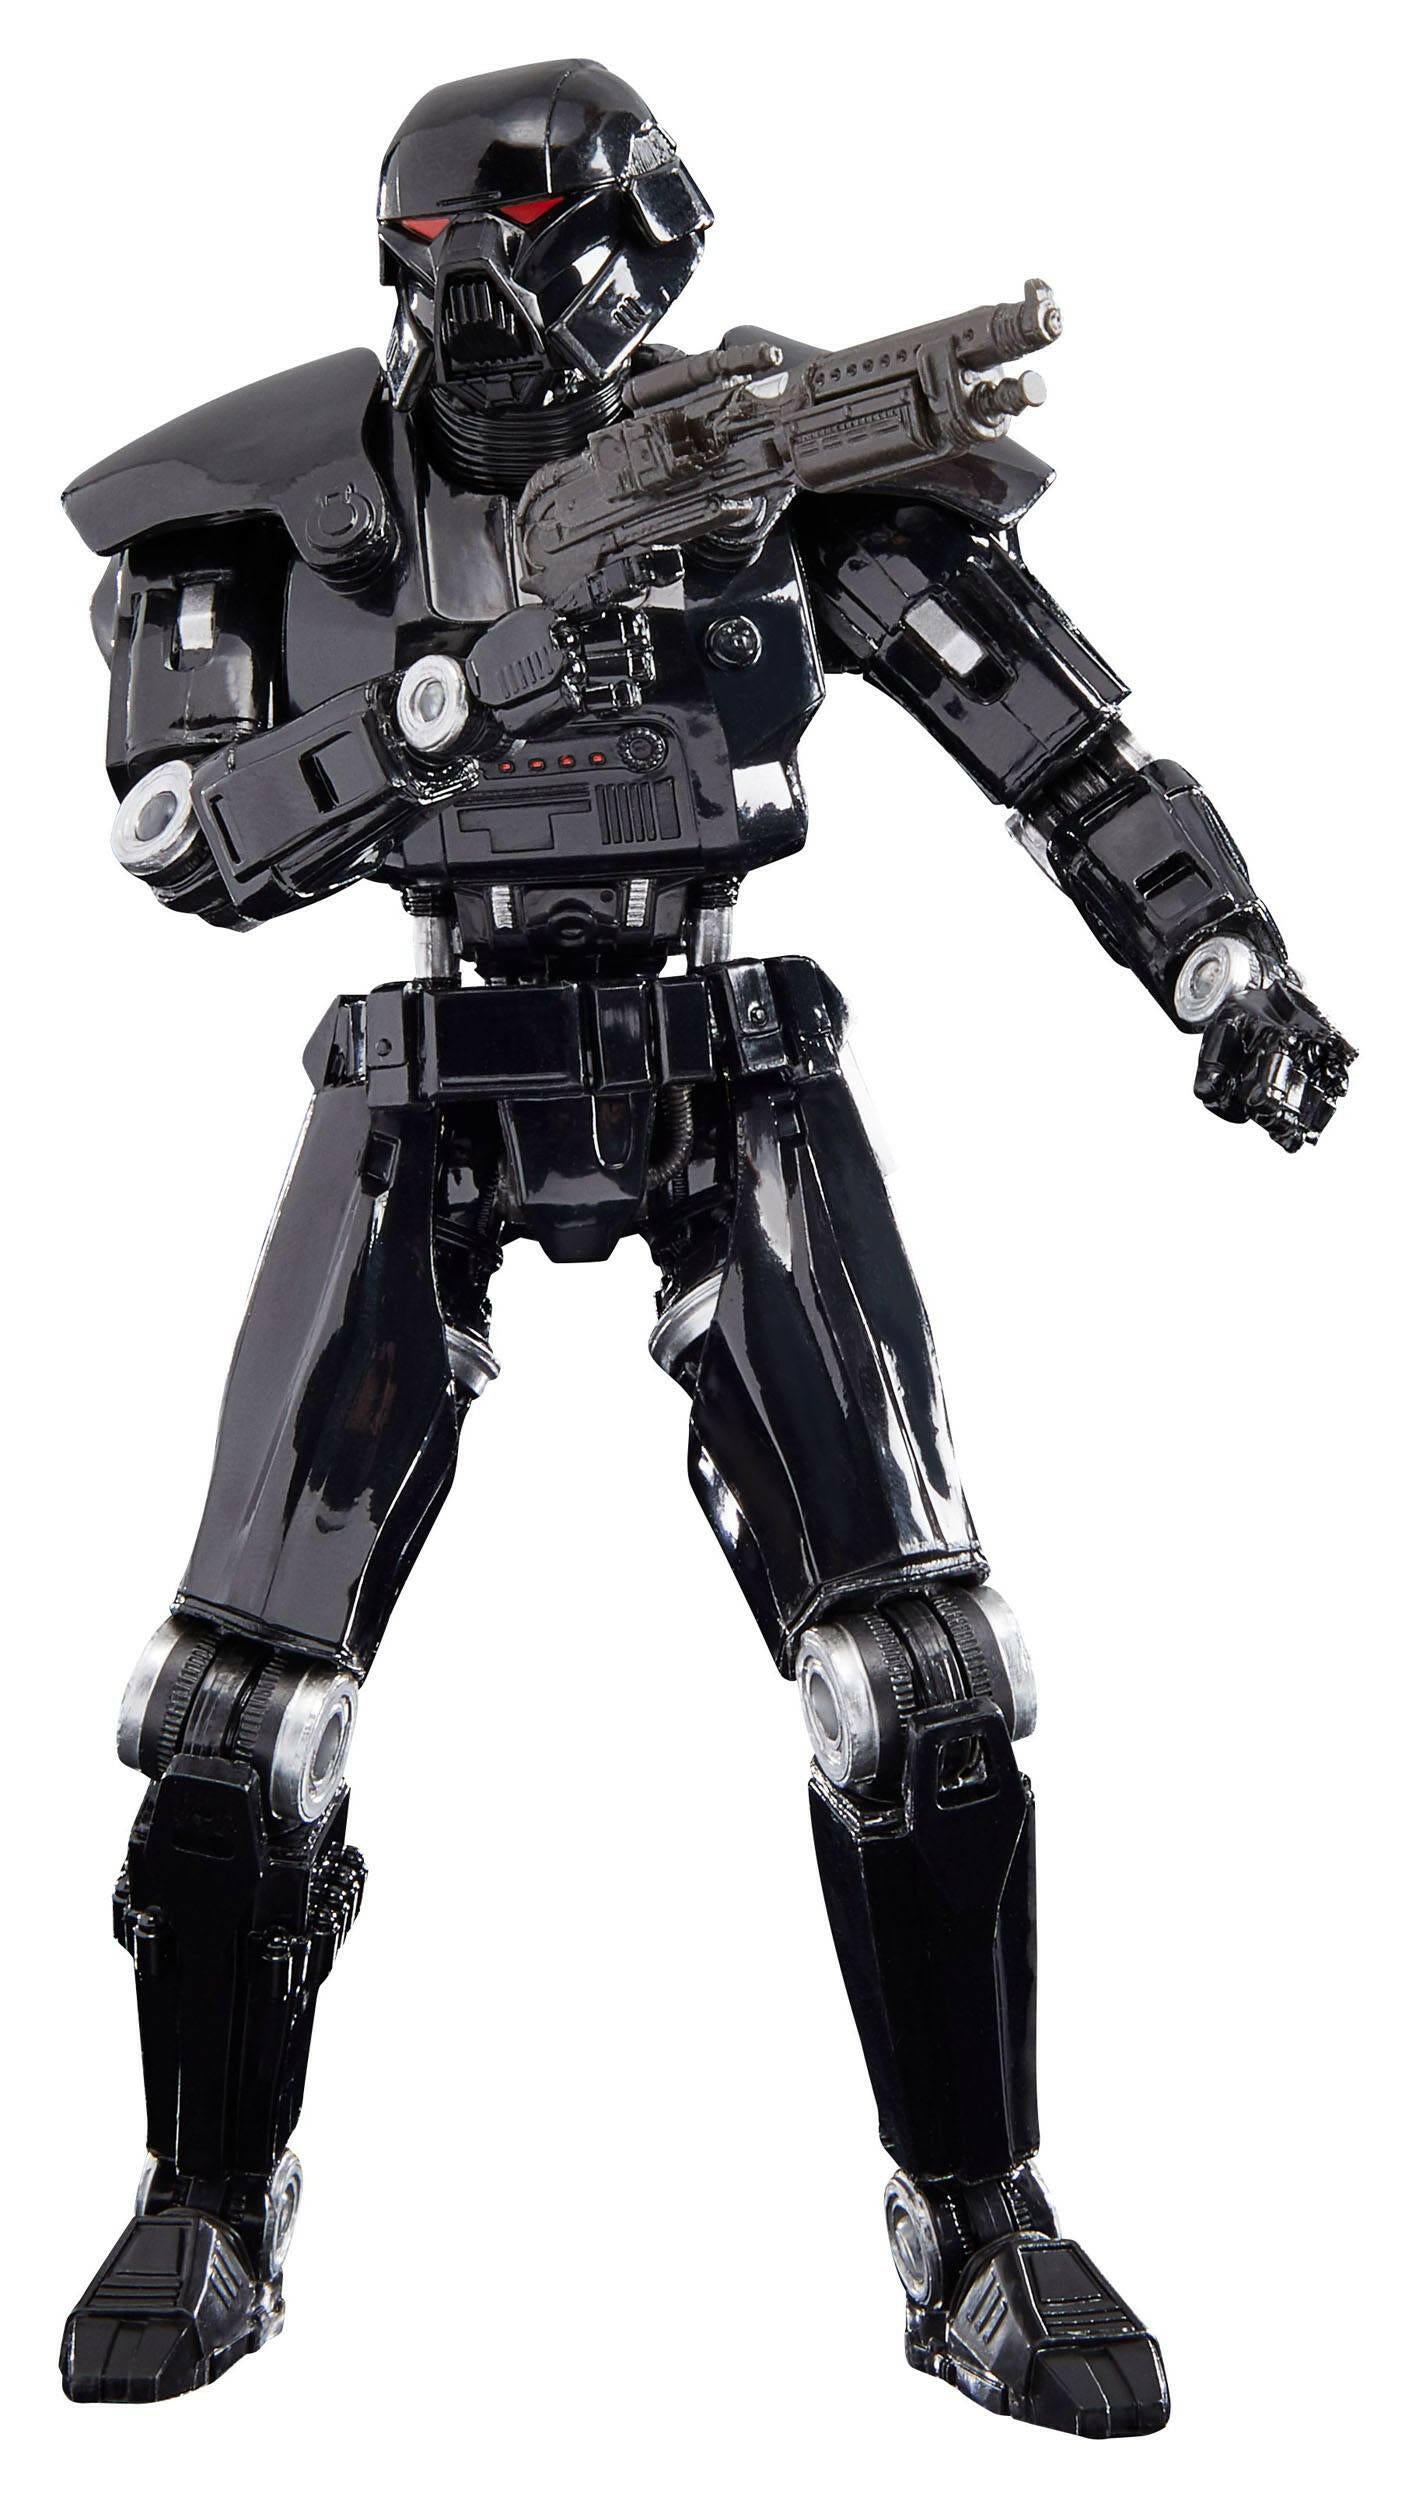 Star Wars Black Series The Mandalorian Deluxe Actionfigur Dark Trooper 15cm Hasbro